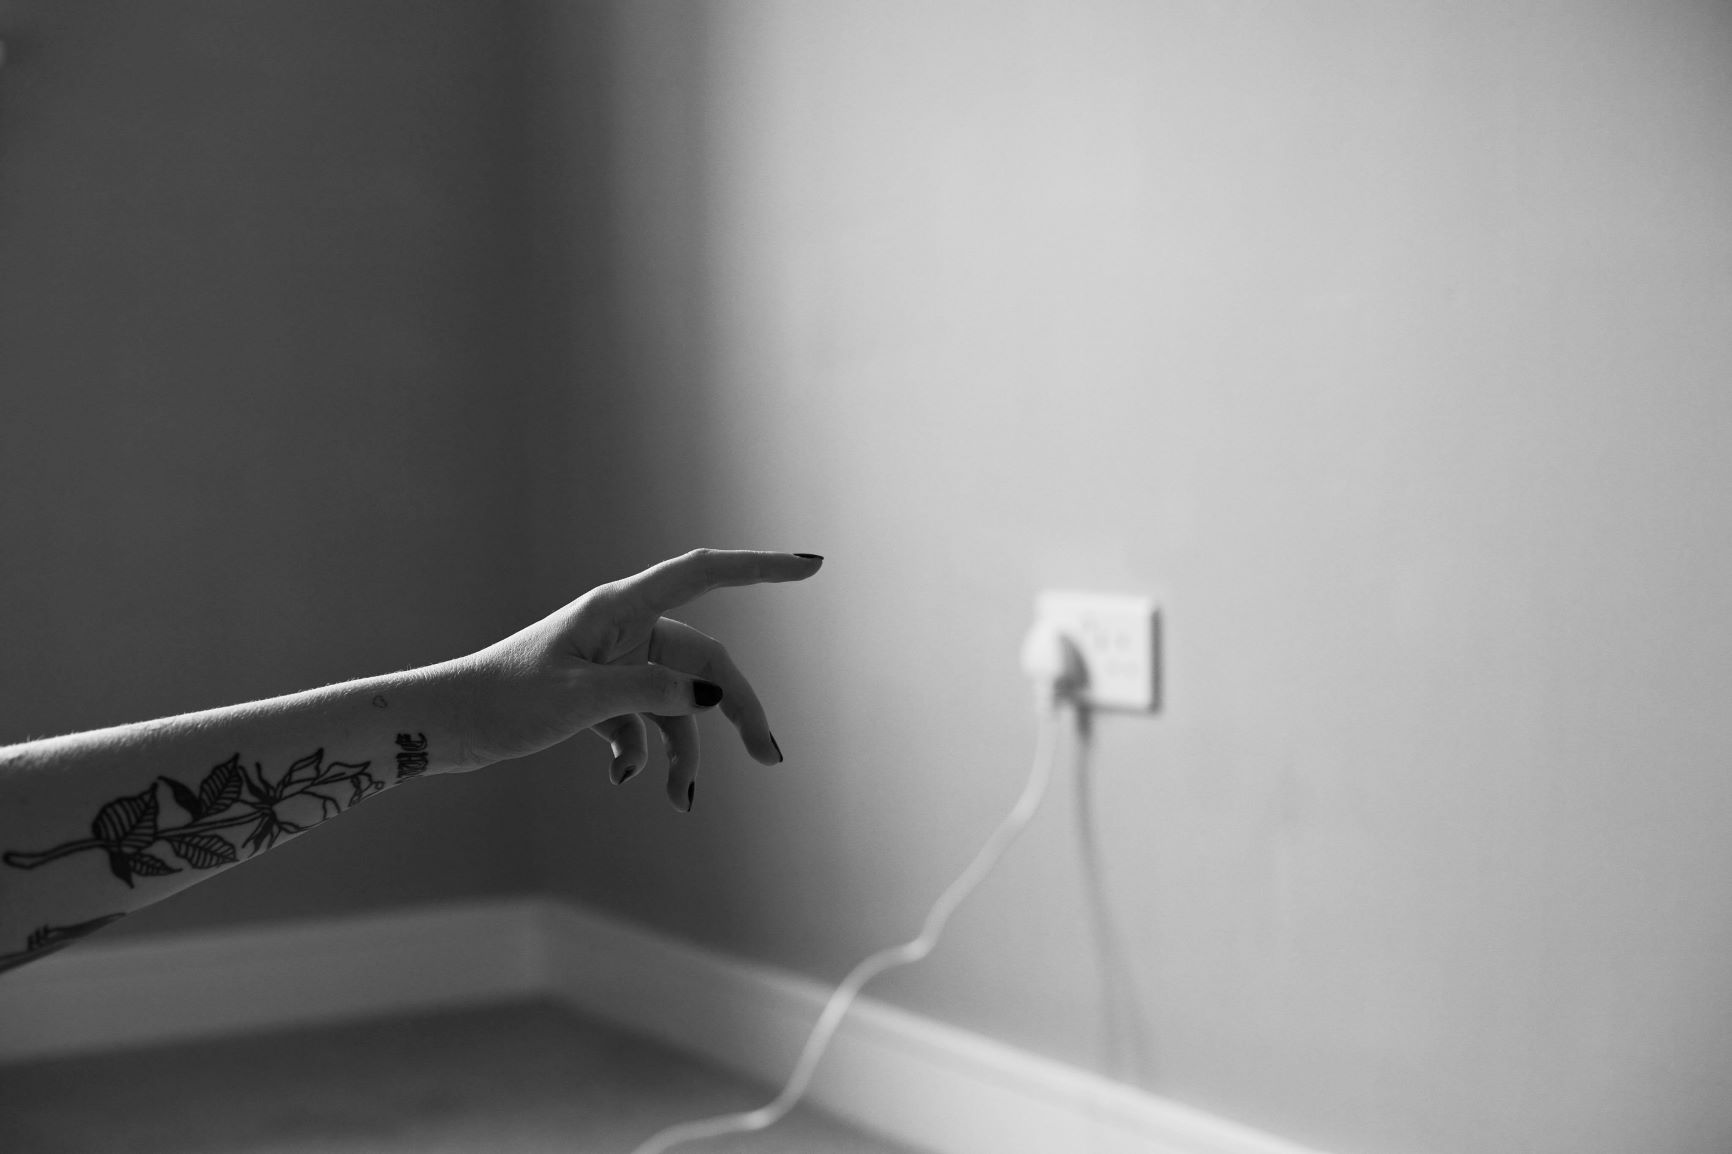 Photo portrait of arm pointing a plug socket